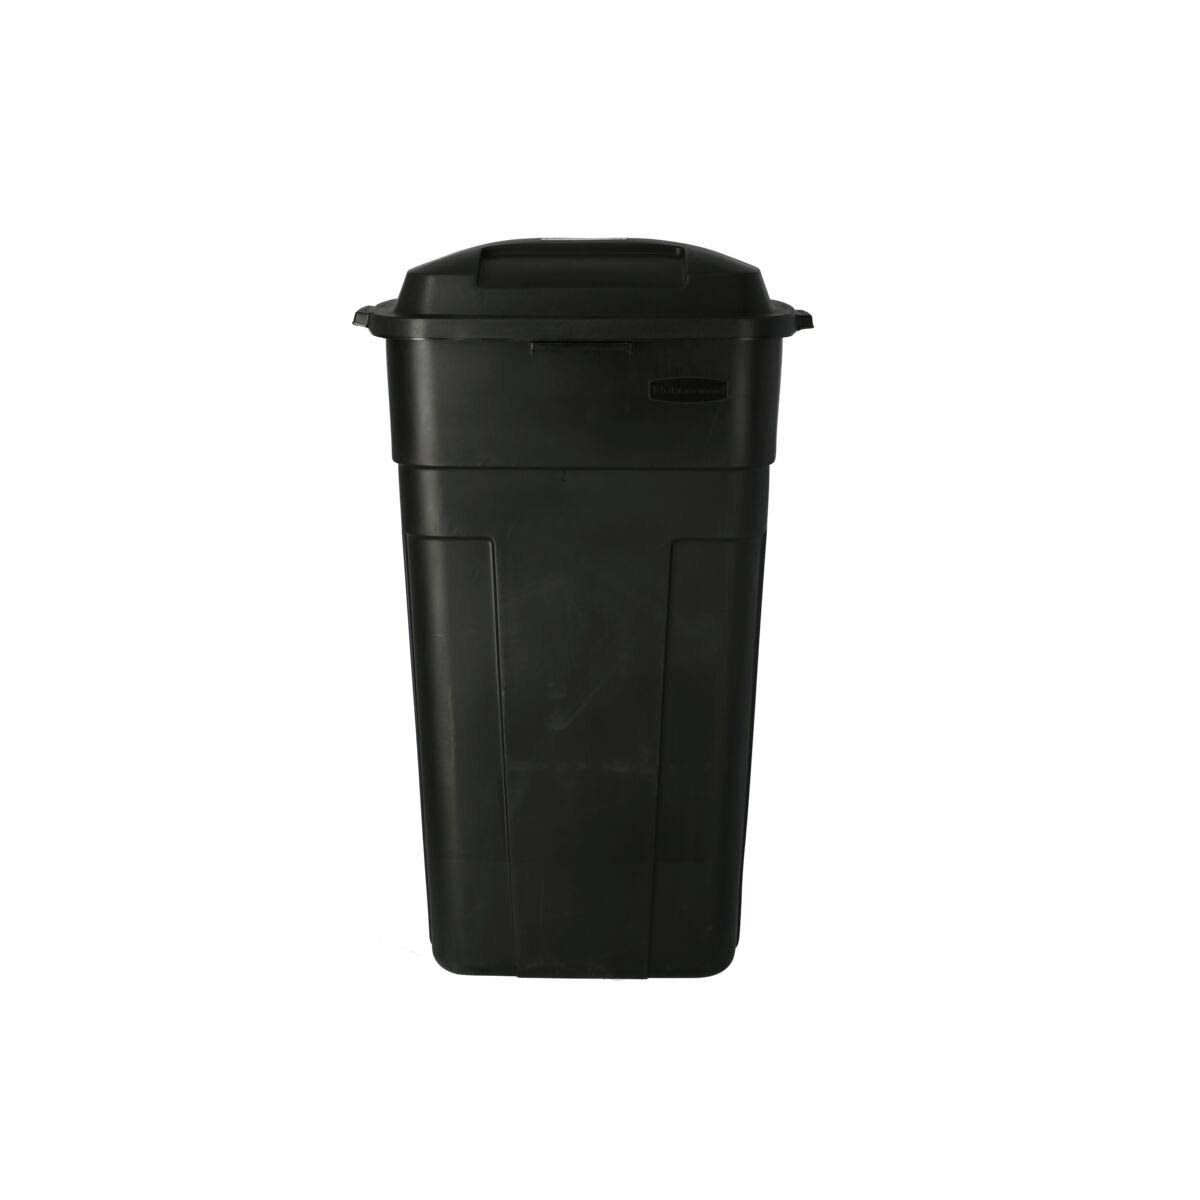 Rubbermaid Roughneck Trash Can - 35 Gallon